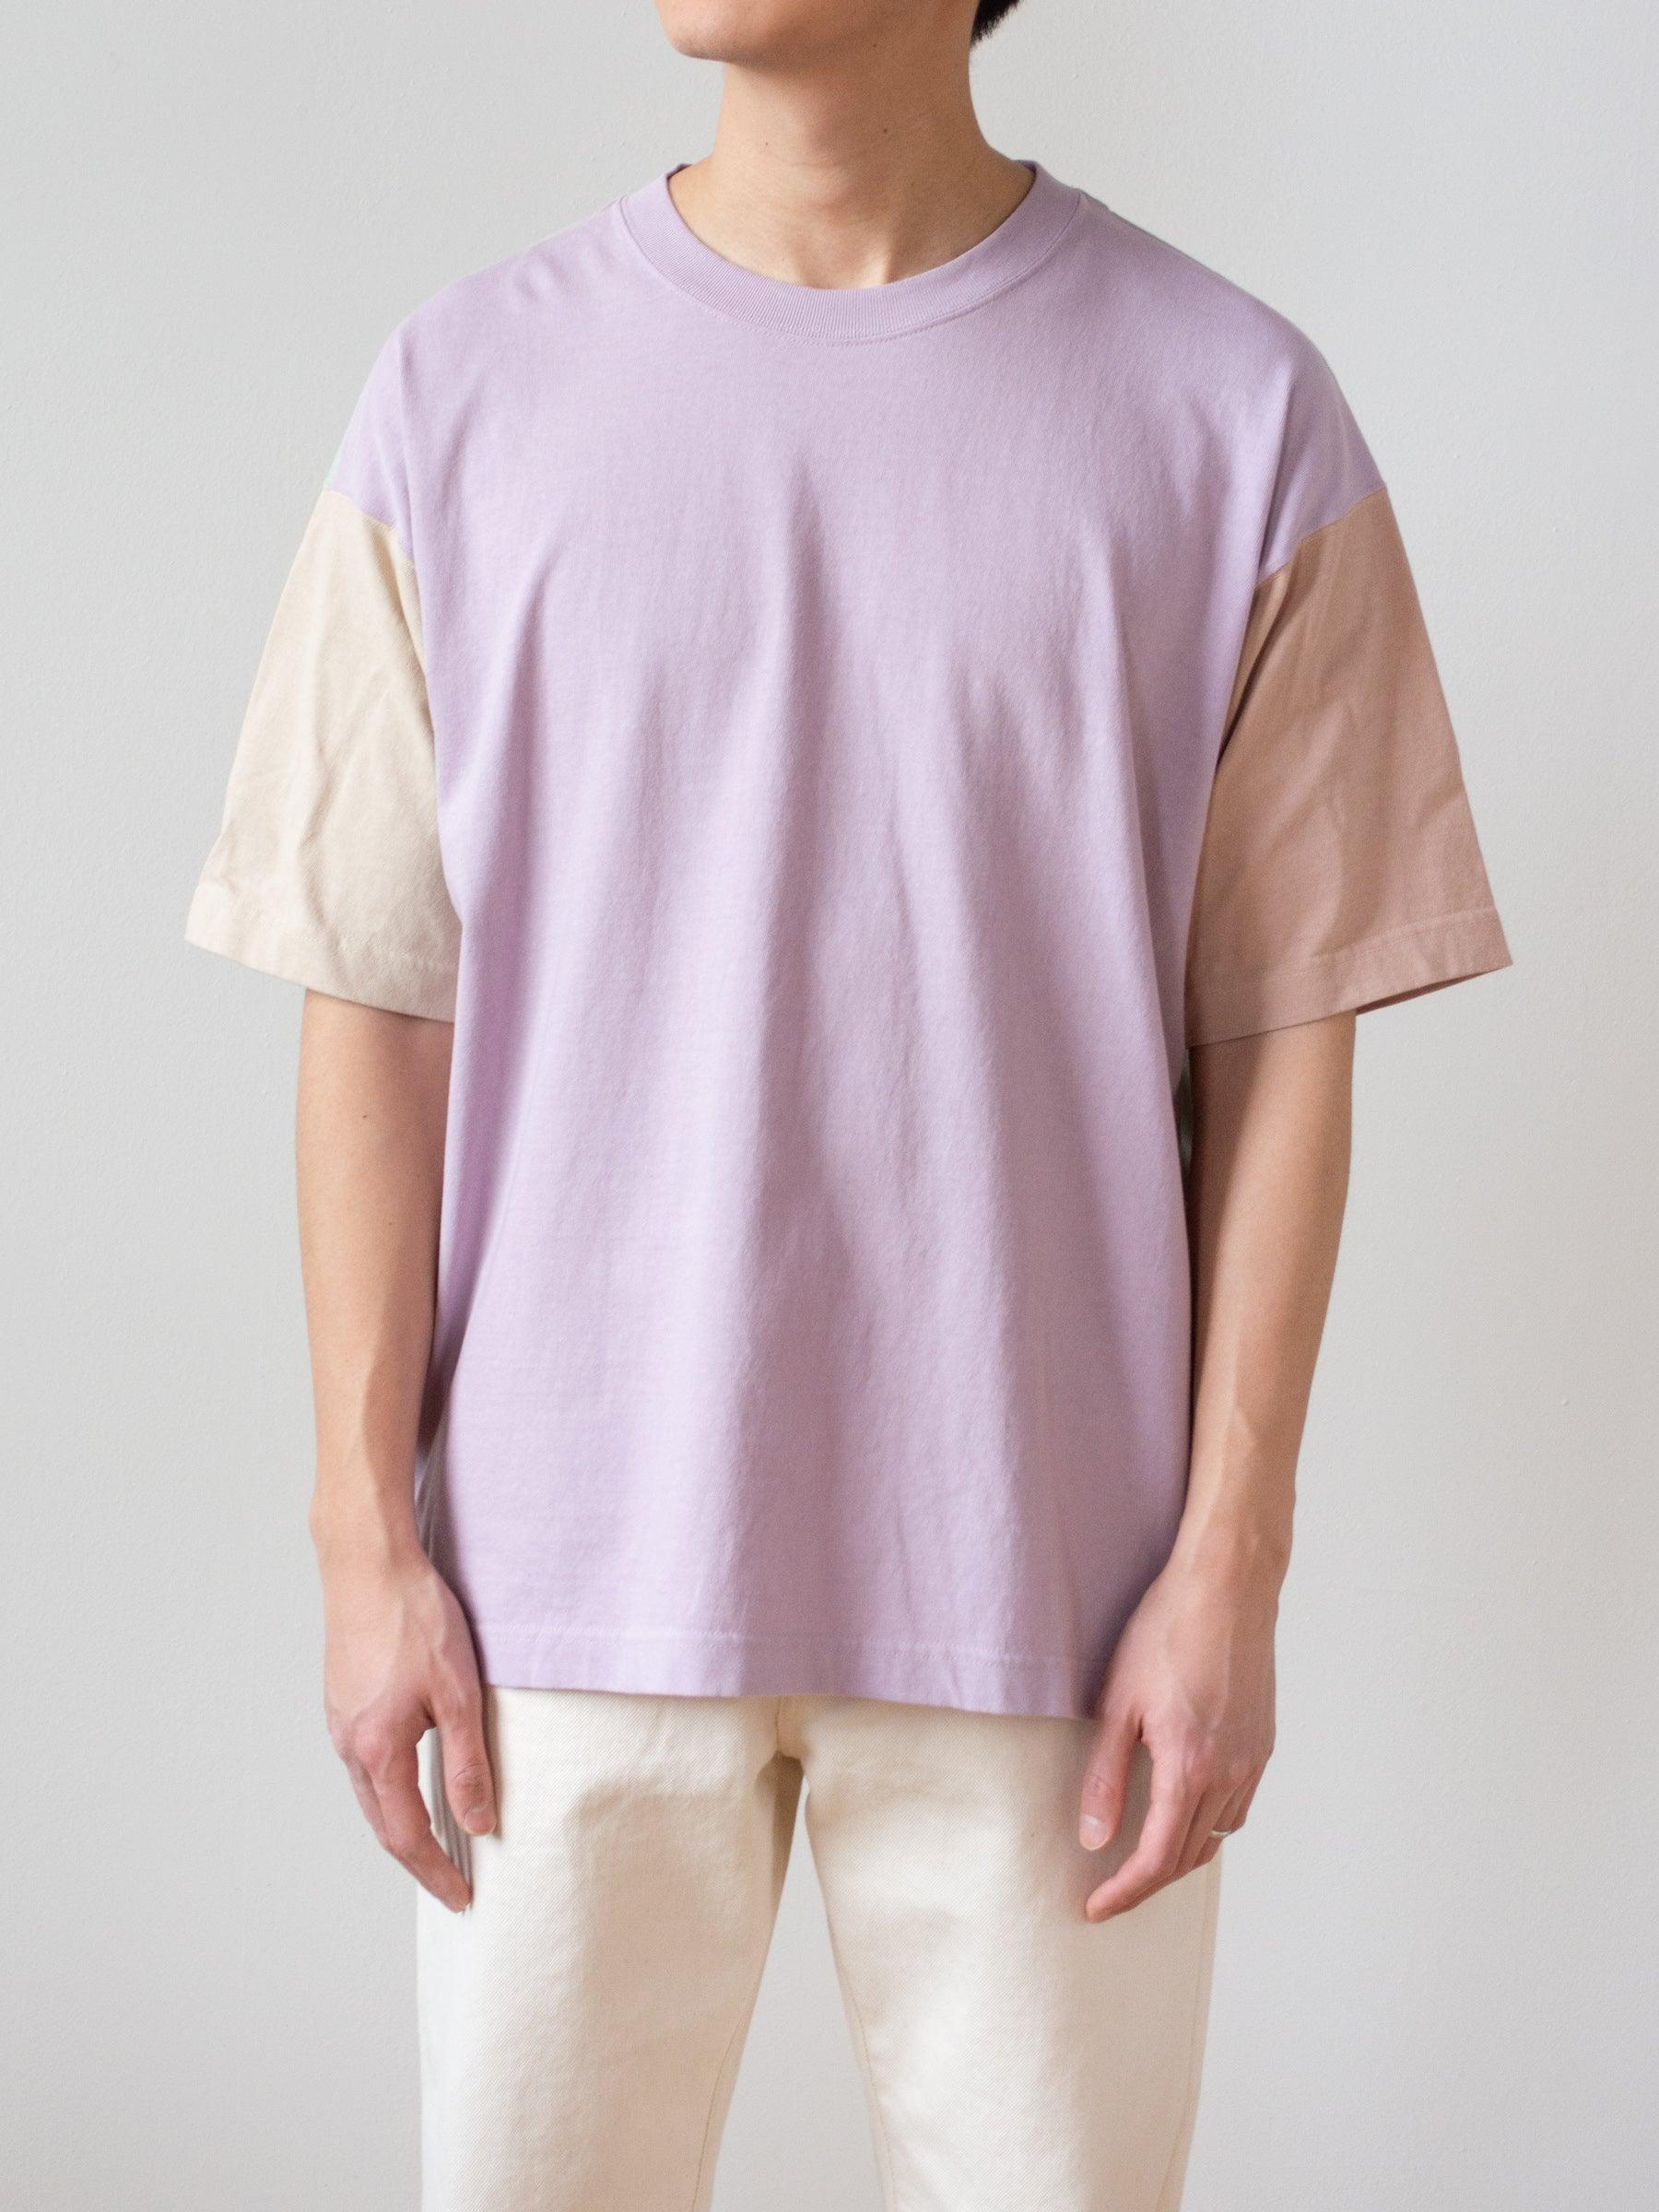 Namu Shop - ts(s) Color Panel Oversized Dry Touch T-Shirt - Lavender